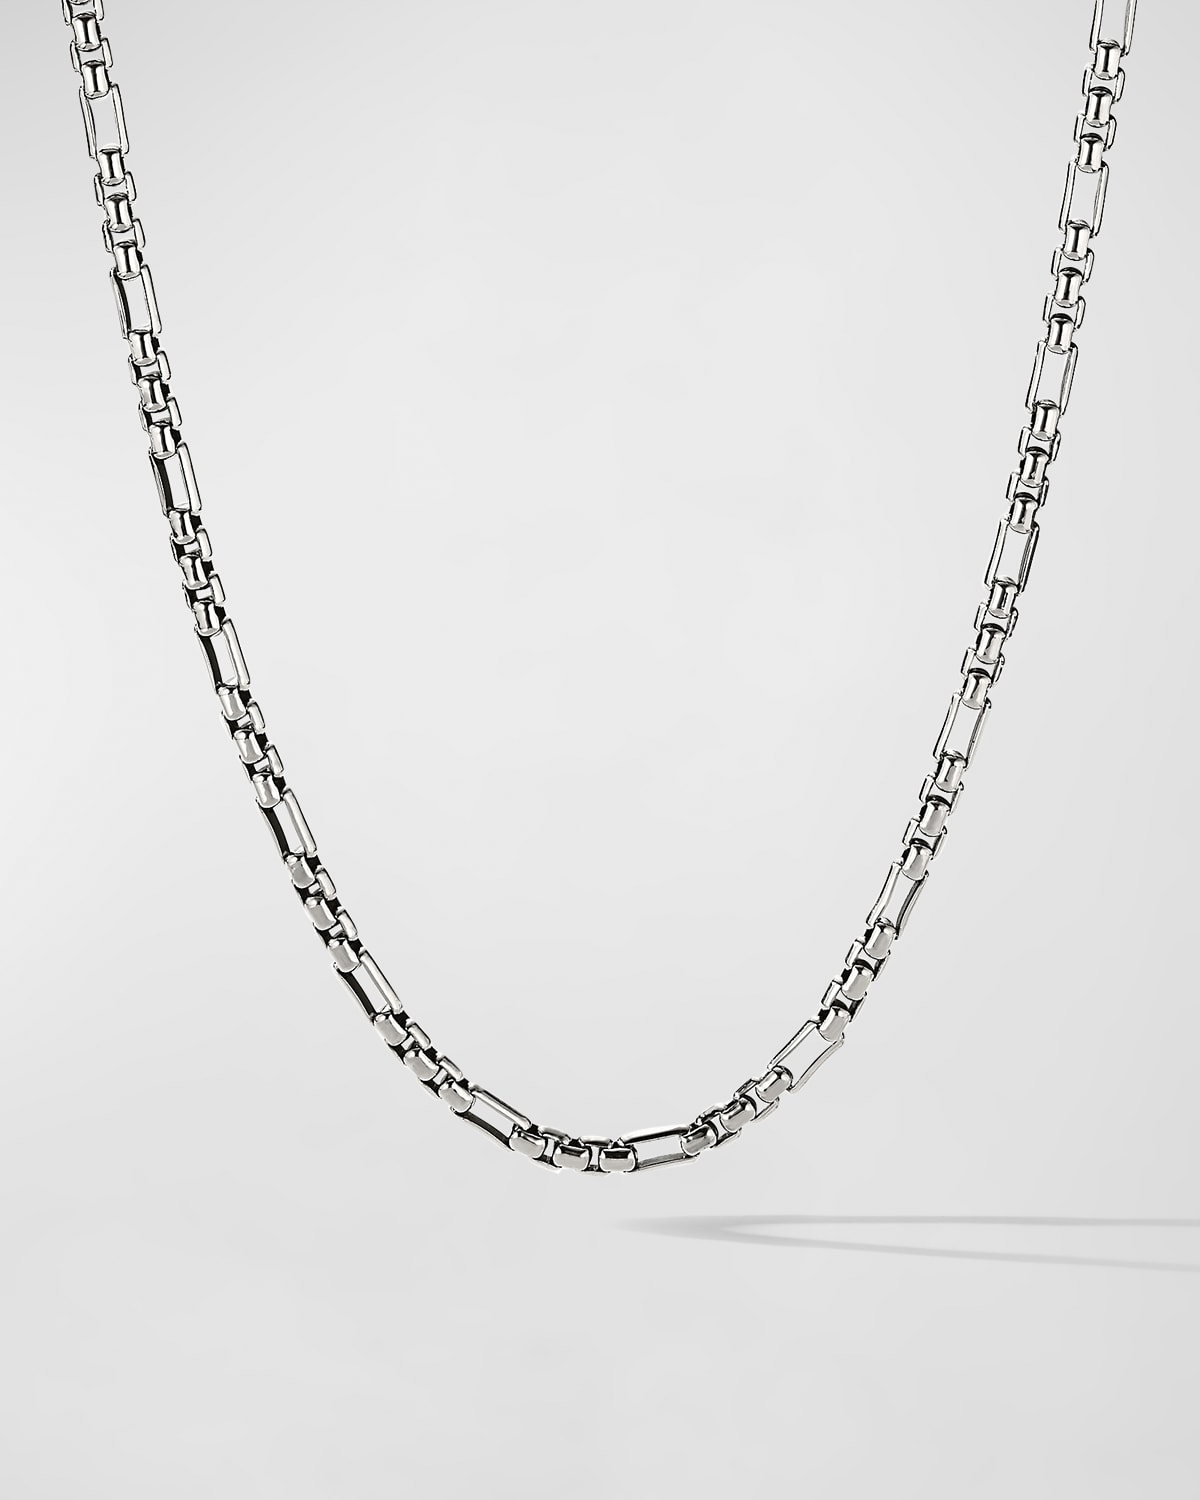 David Yurman Men's Open Station Box Chain Necklace In Sterling Silver, 3mm, 26"l